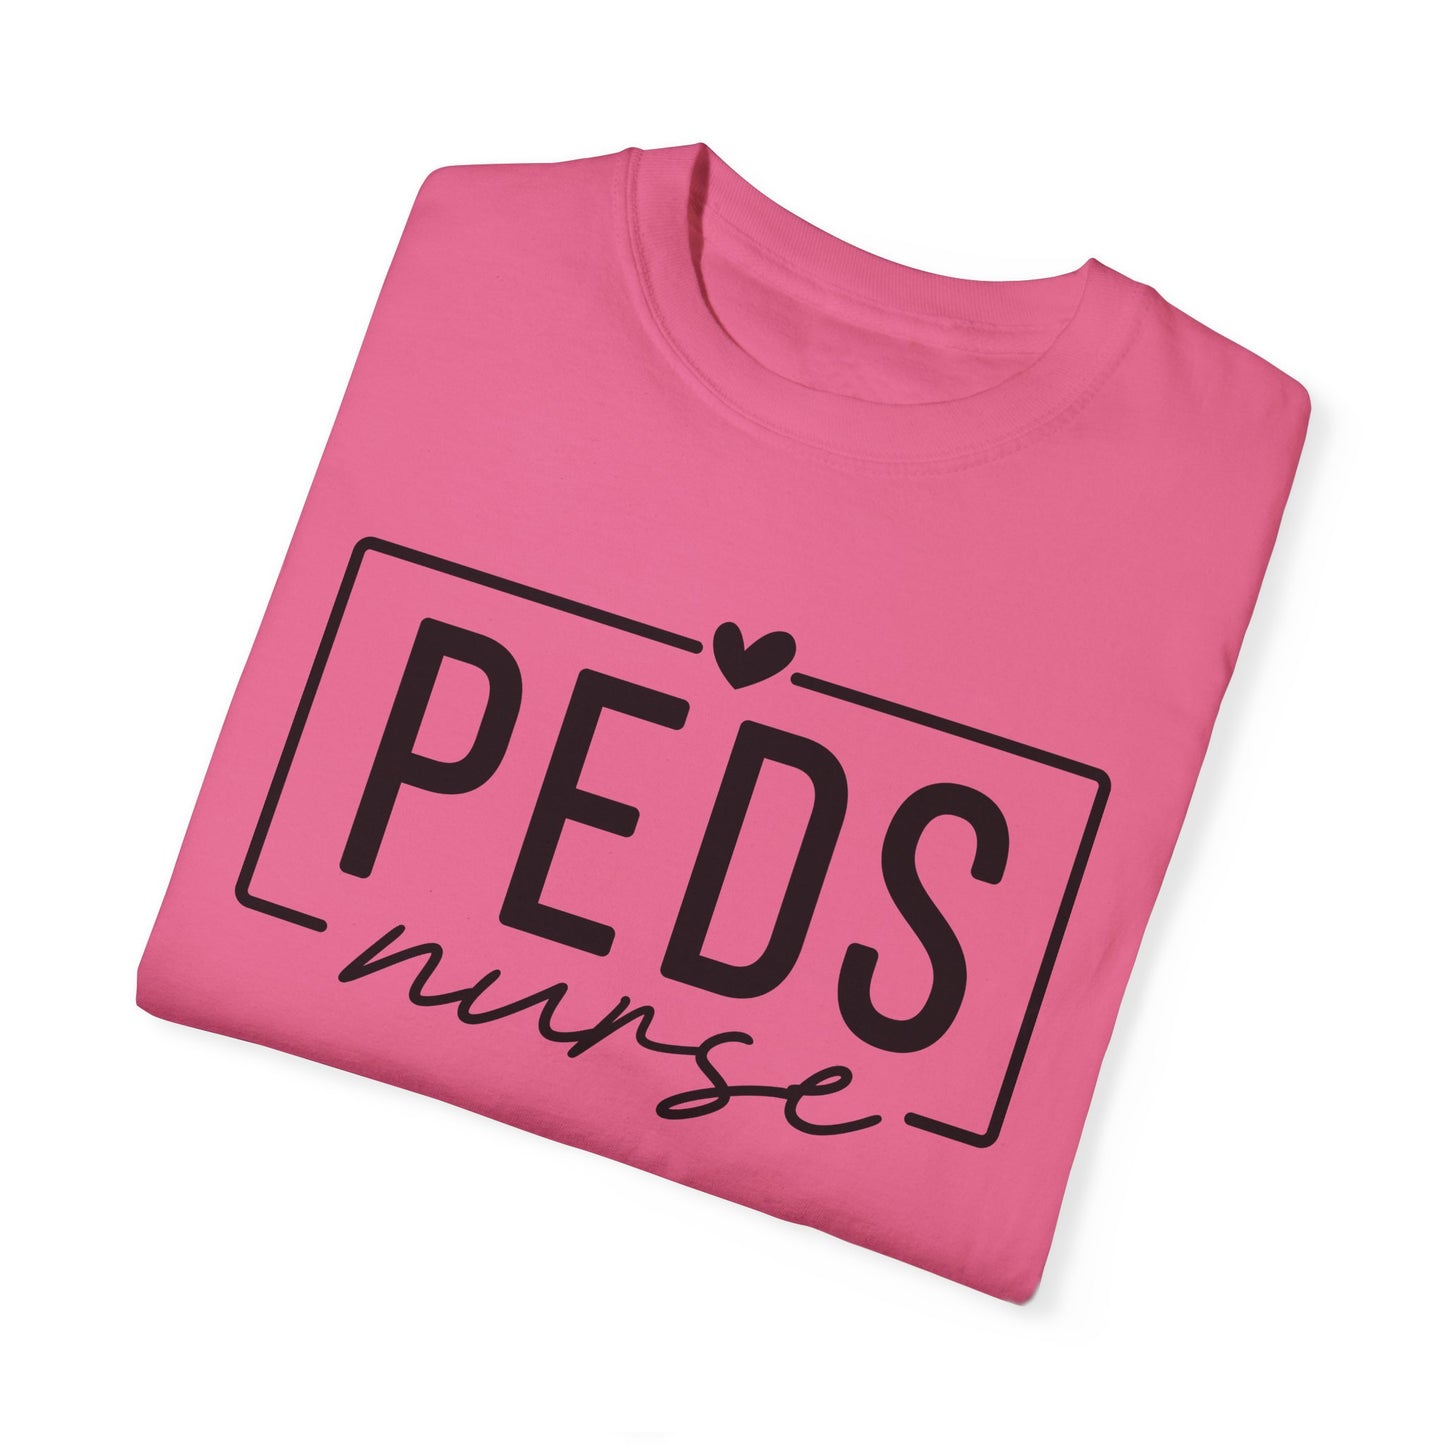 Pediatric Nurse T-Shirt, Peds Nurse Minimalist Design on Comfort Color Shirt, Women Children Nurse Oversized Tee, Registered Nurse Gift Men